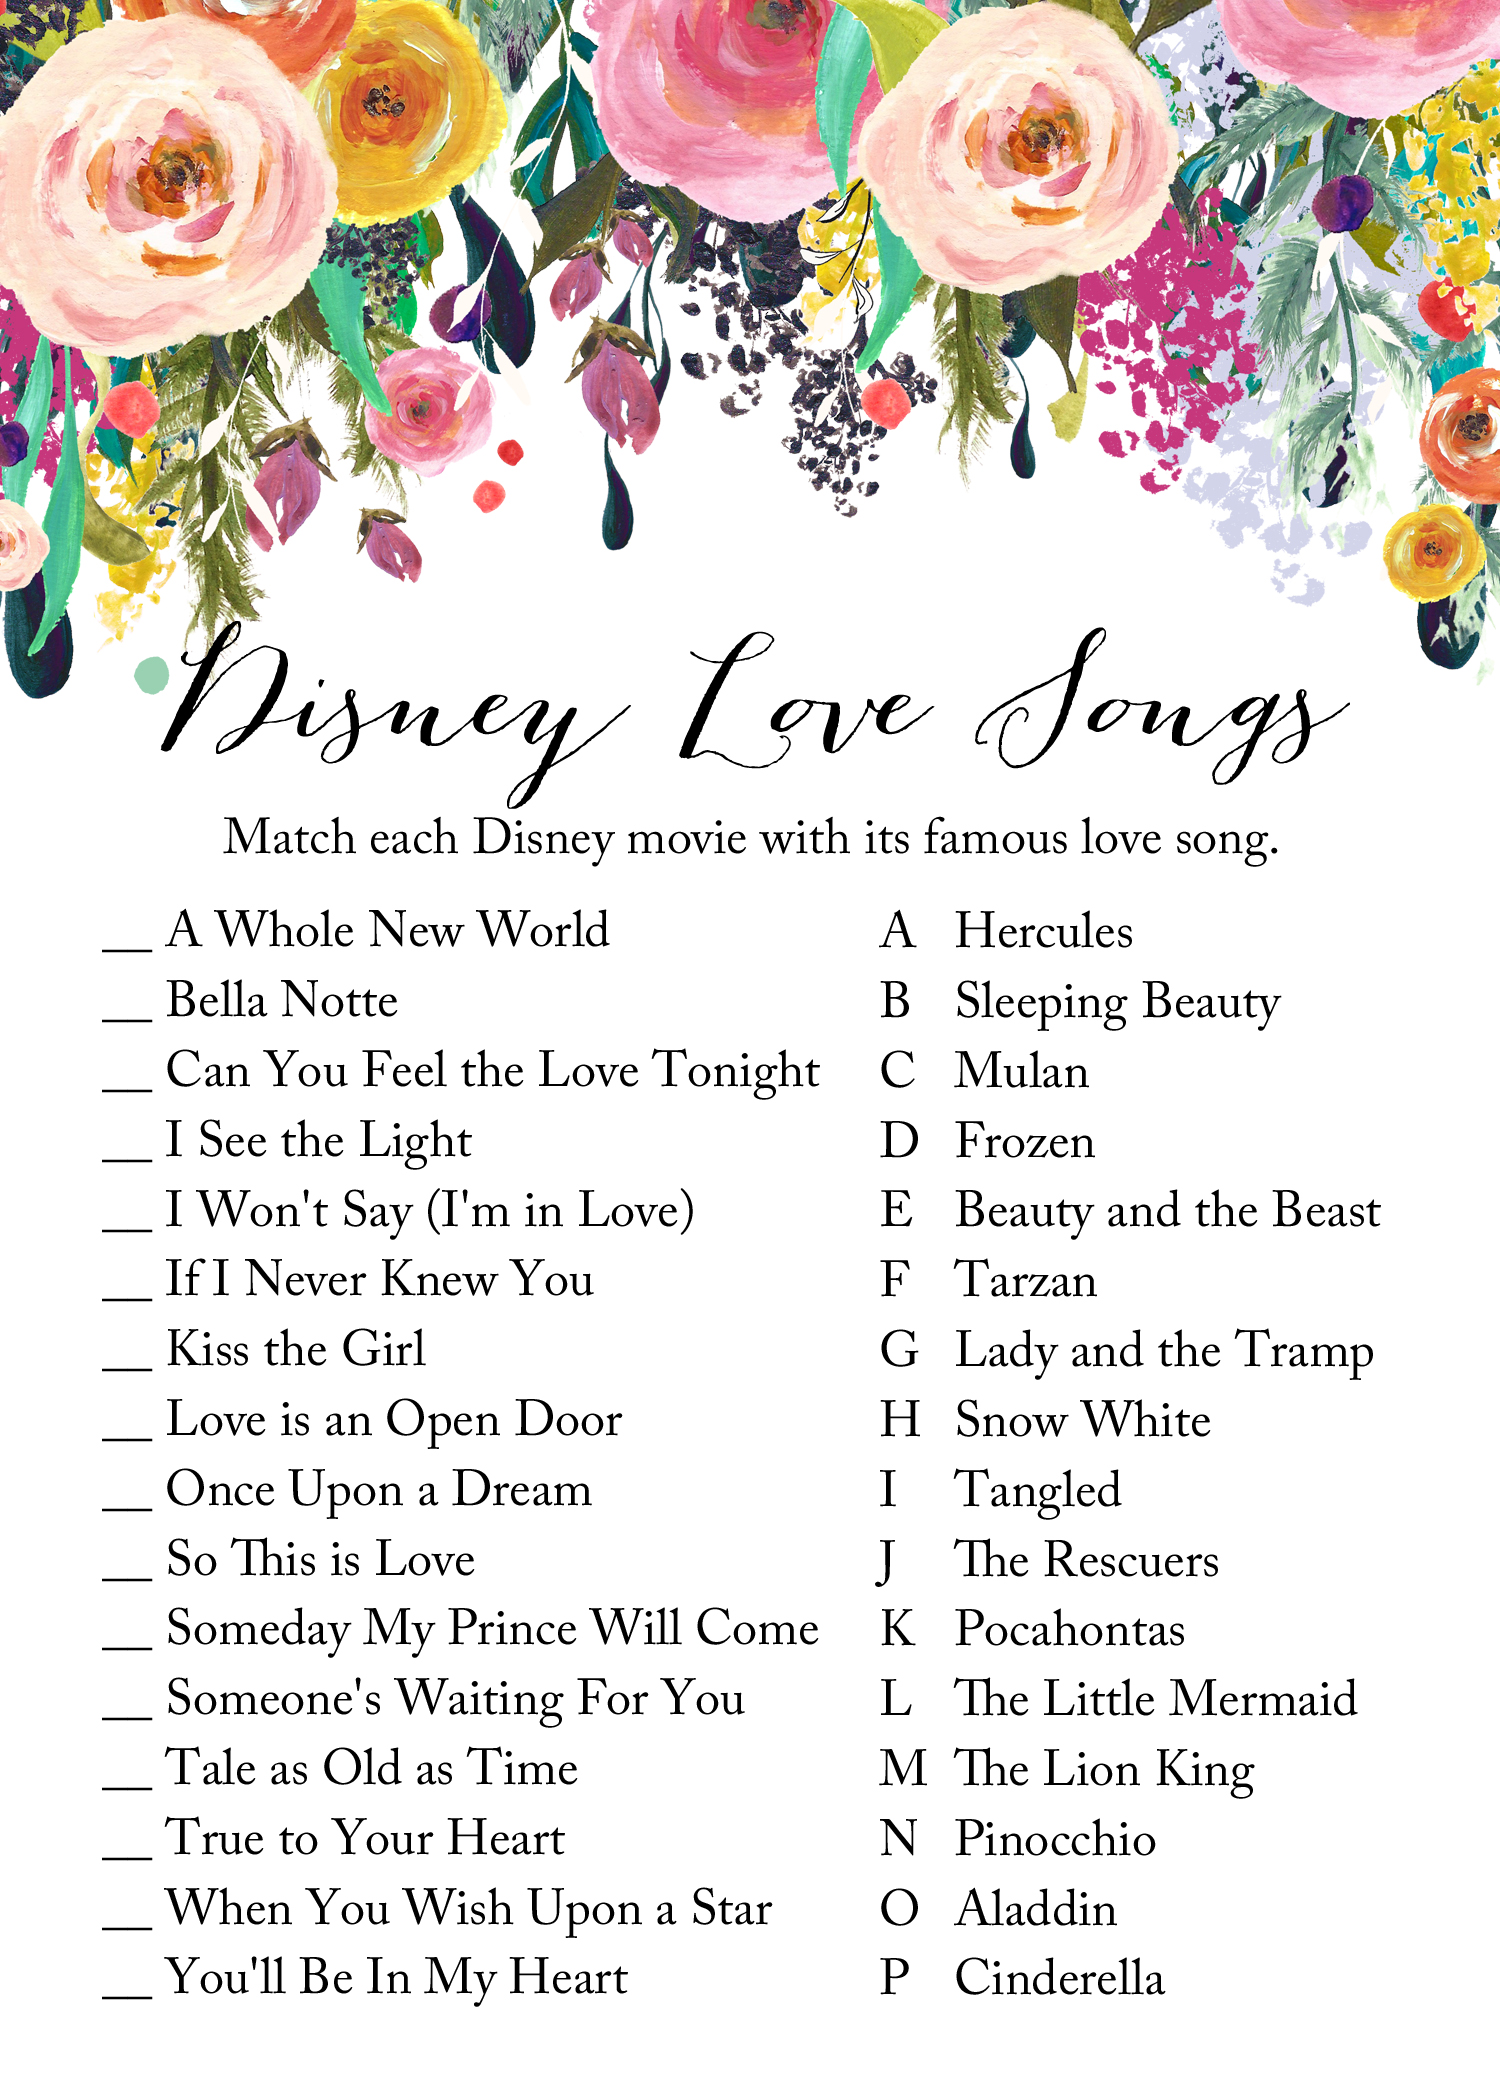 free-disney-love-song-bridal-shower-game-bridal-shower-ideas-themes